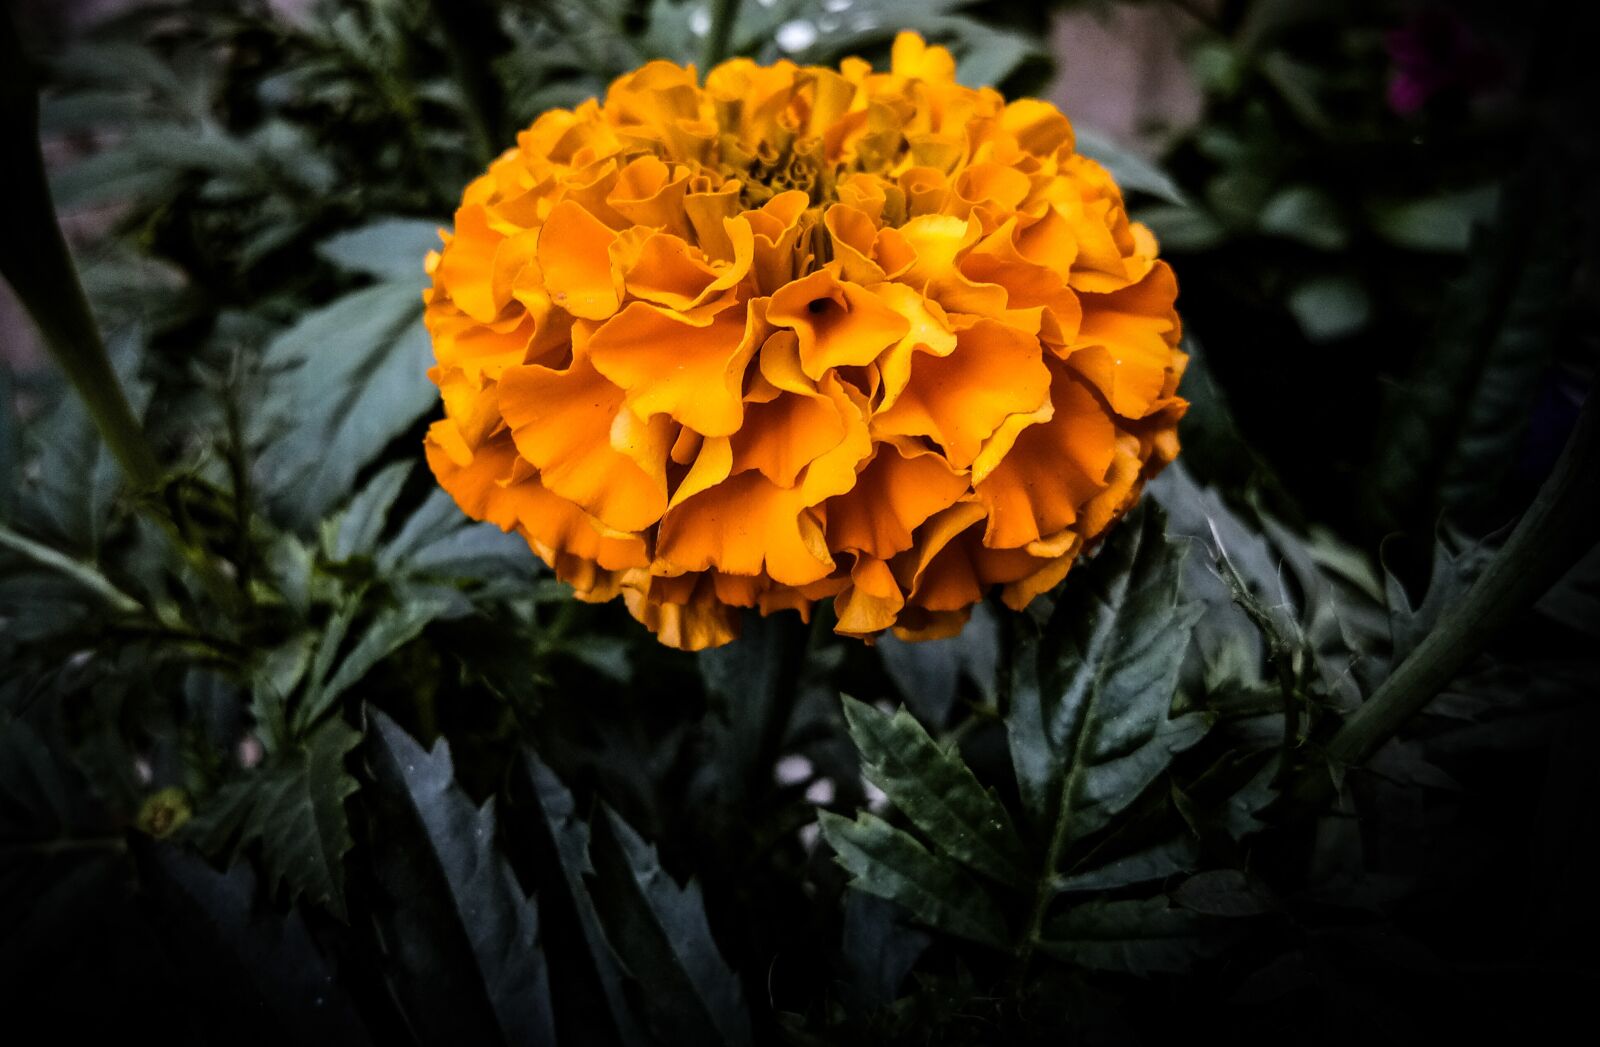 vivo 1609 sample photo. Marigold, flower, orange photography